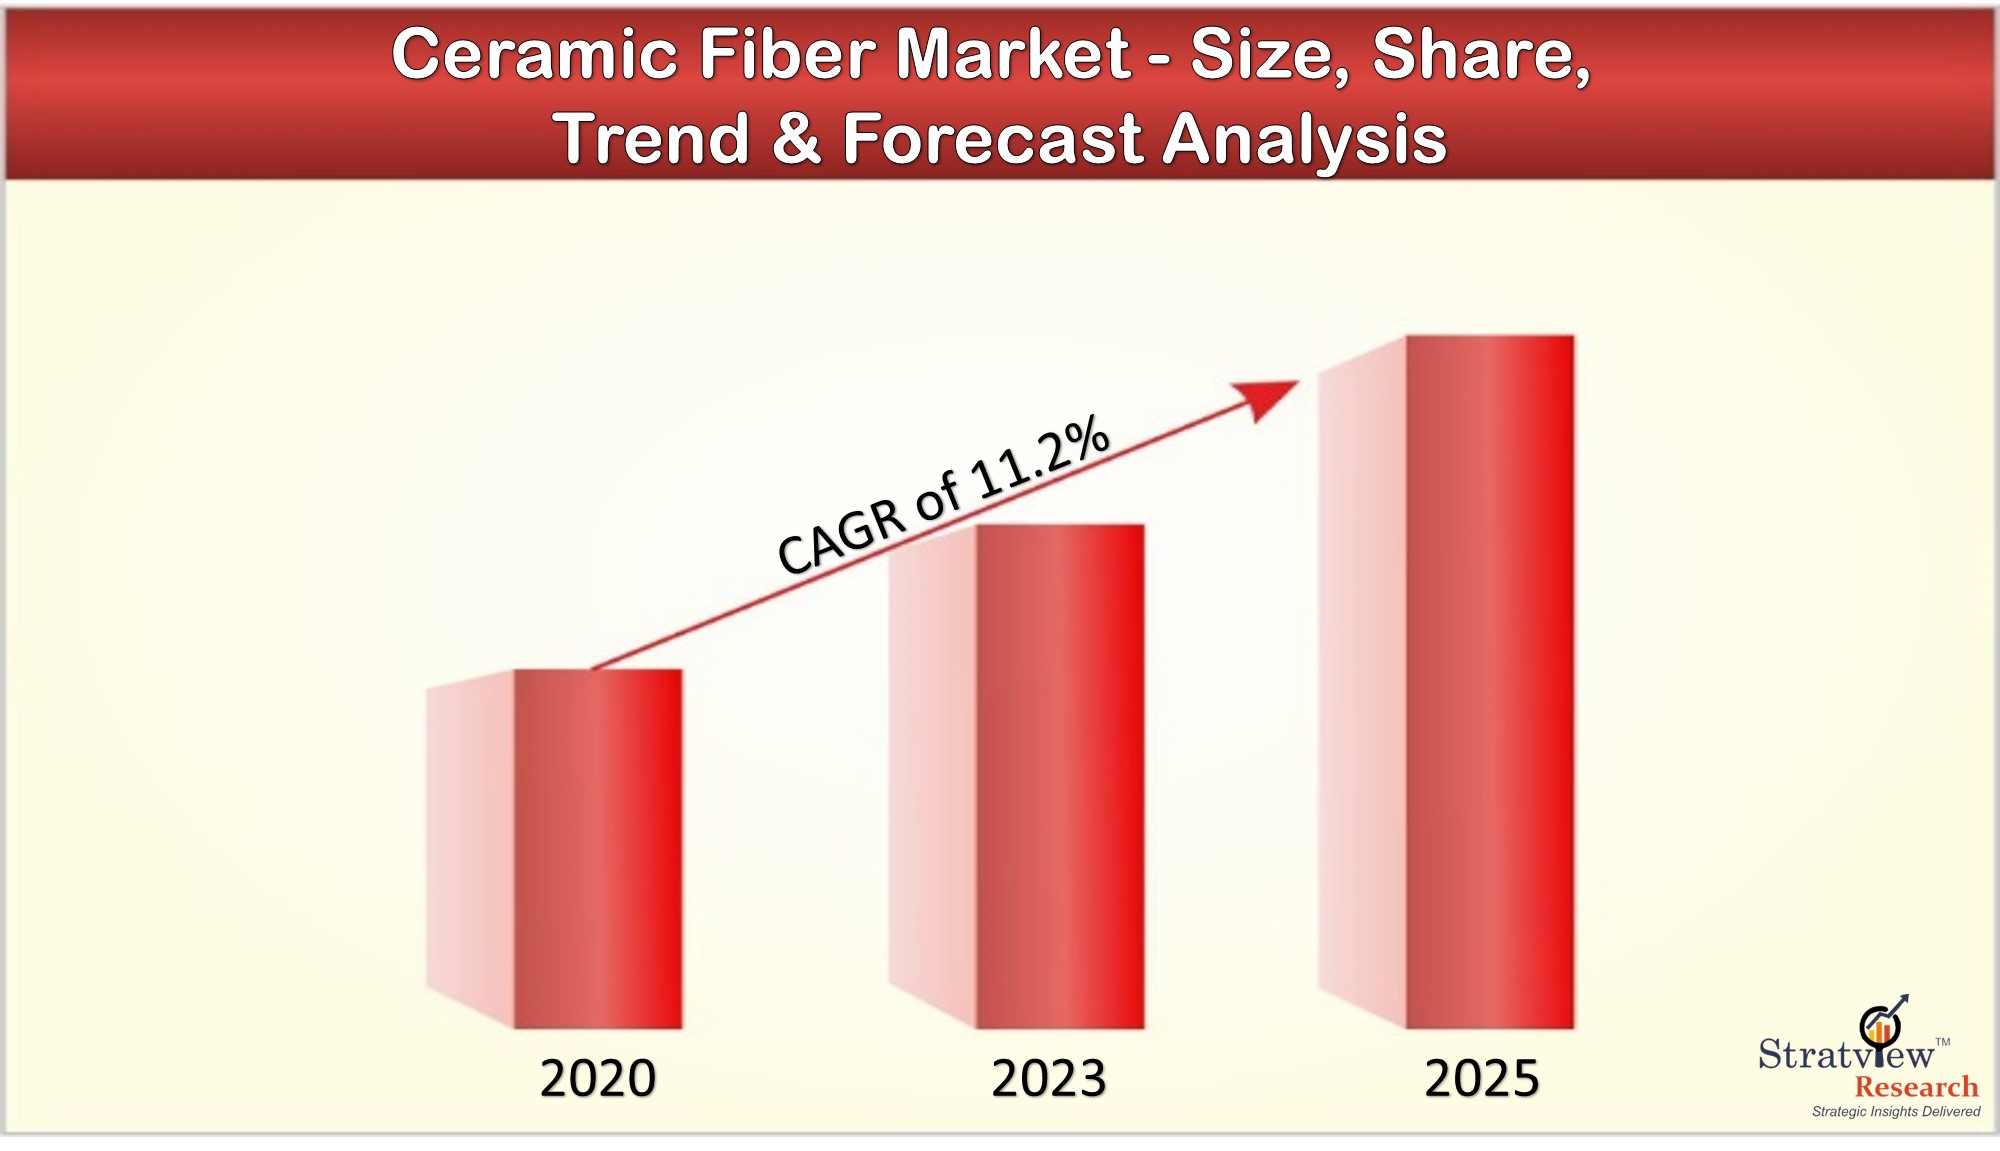 Ceramic Fiber Market to offer a healthy CAGR of 11.2% during 2020-25